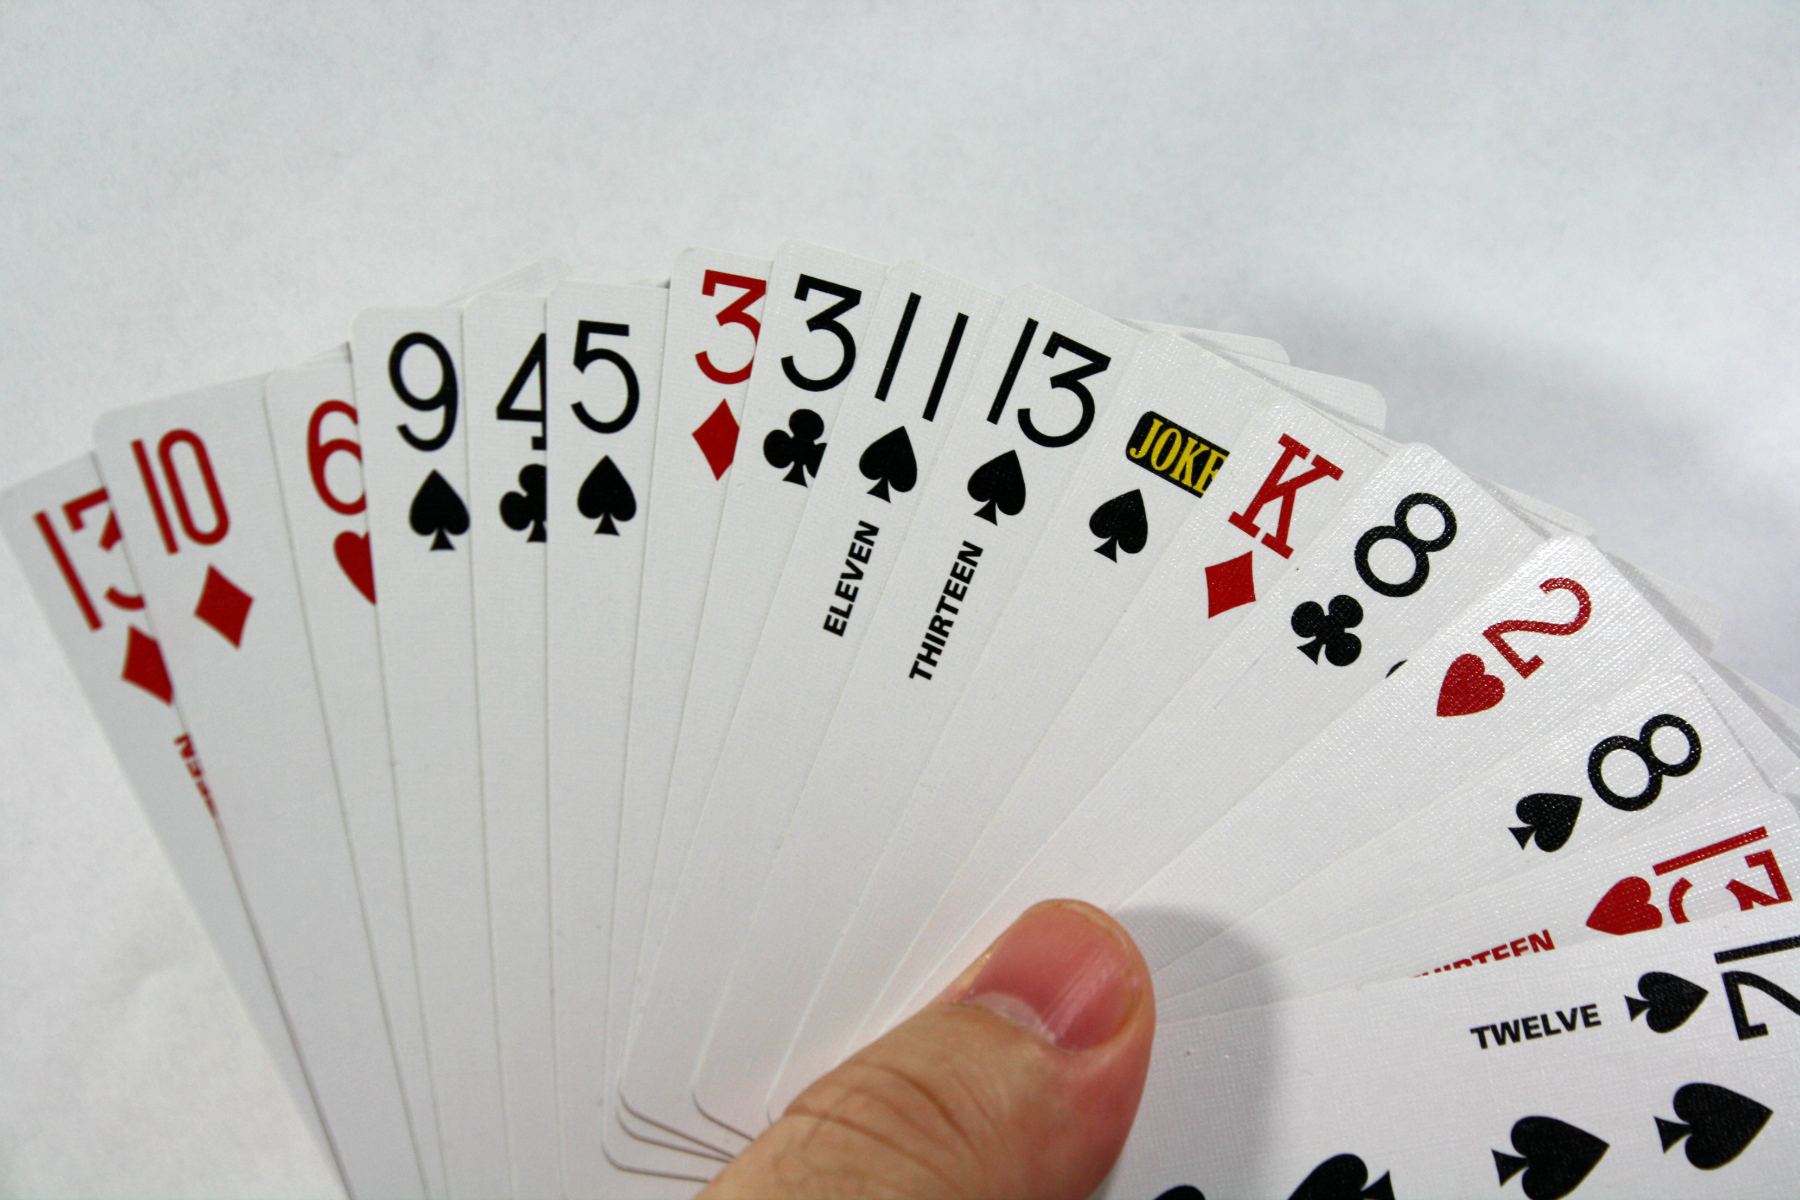 Играть 6 карту. 500 Card game. Круглые яйца игральные карты. Super Solitaire – Card game. 2.6 Deck.